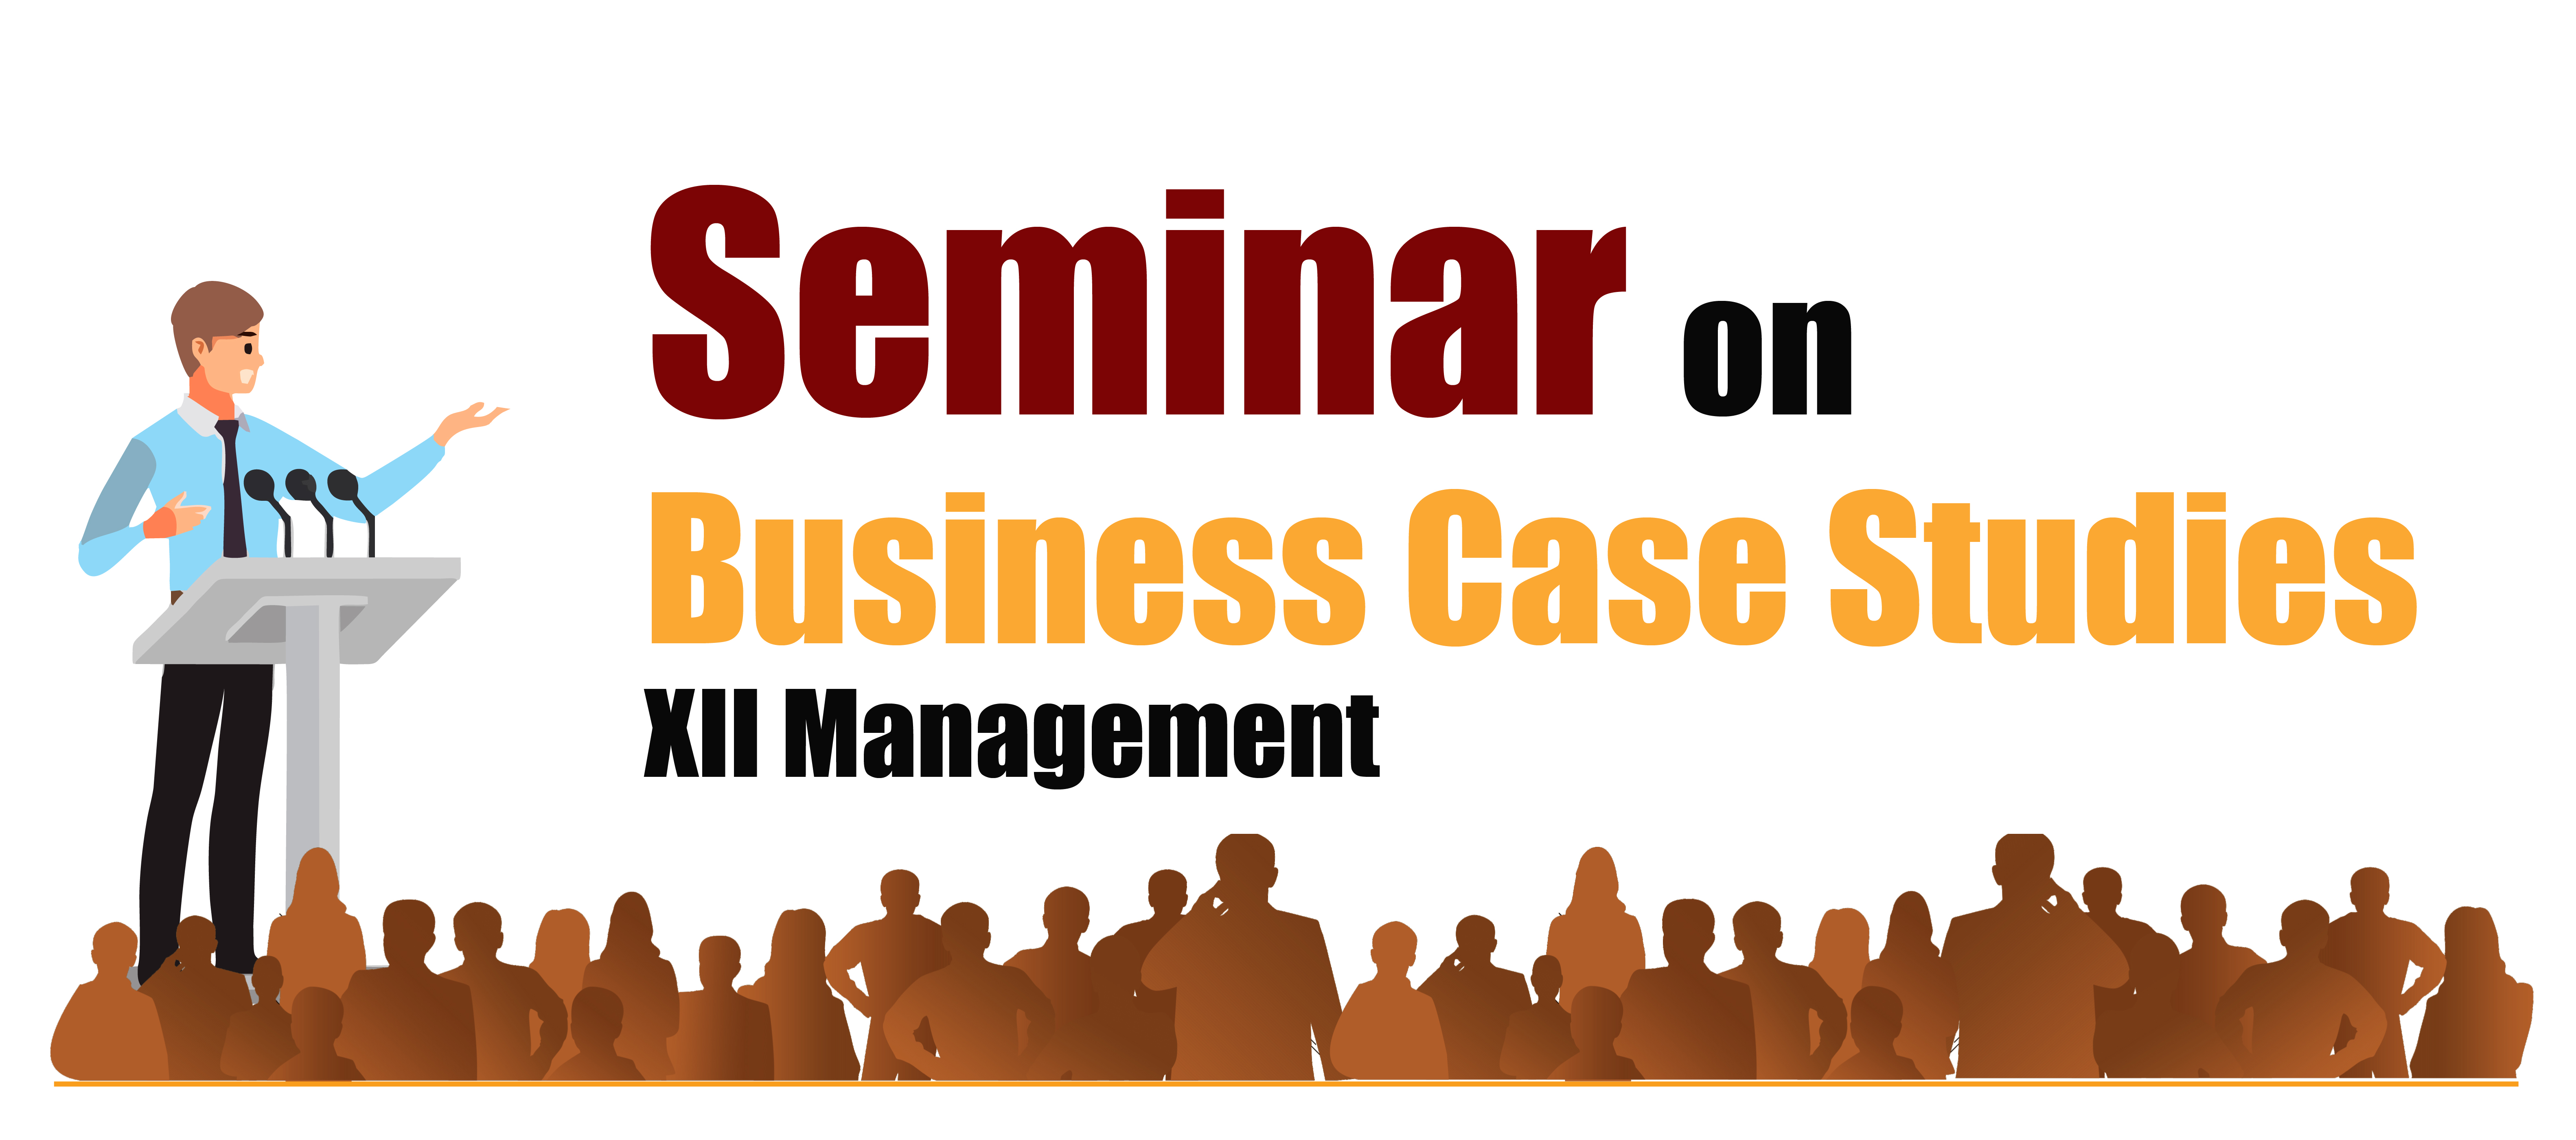 Seminar on Business Case Studies XII Management